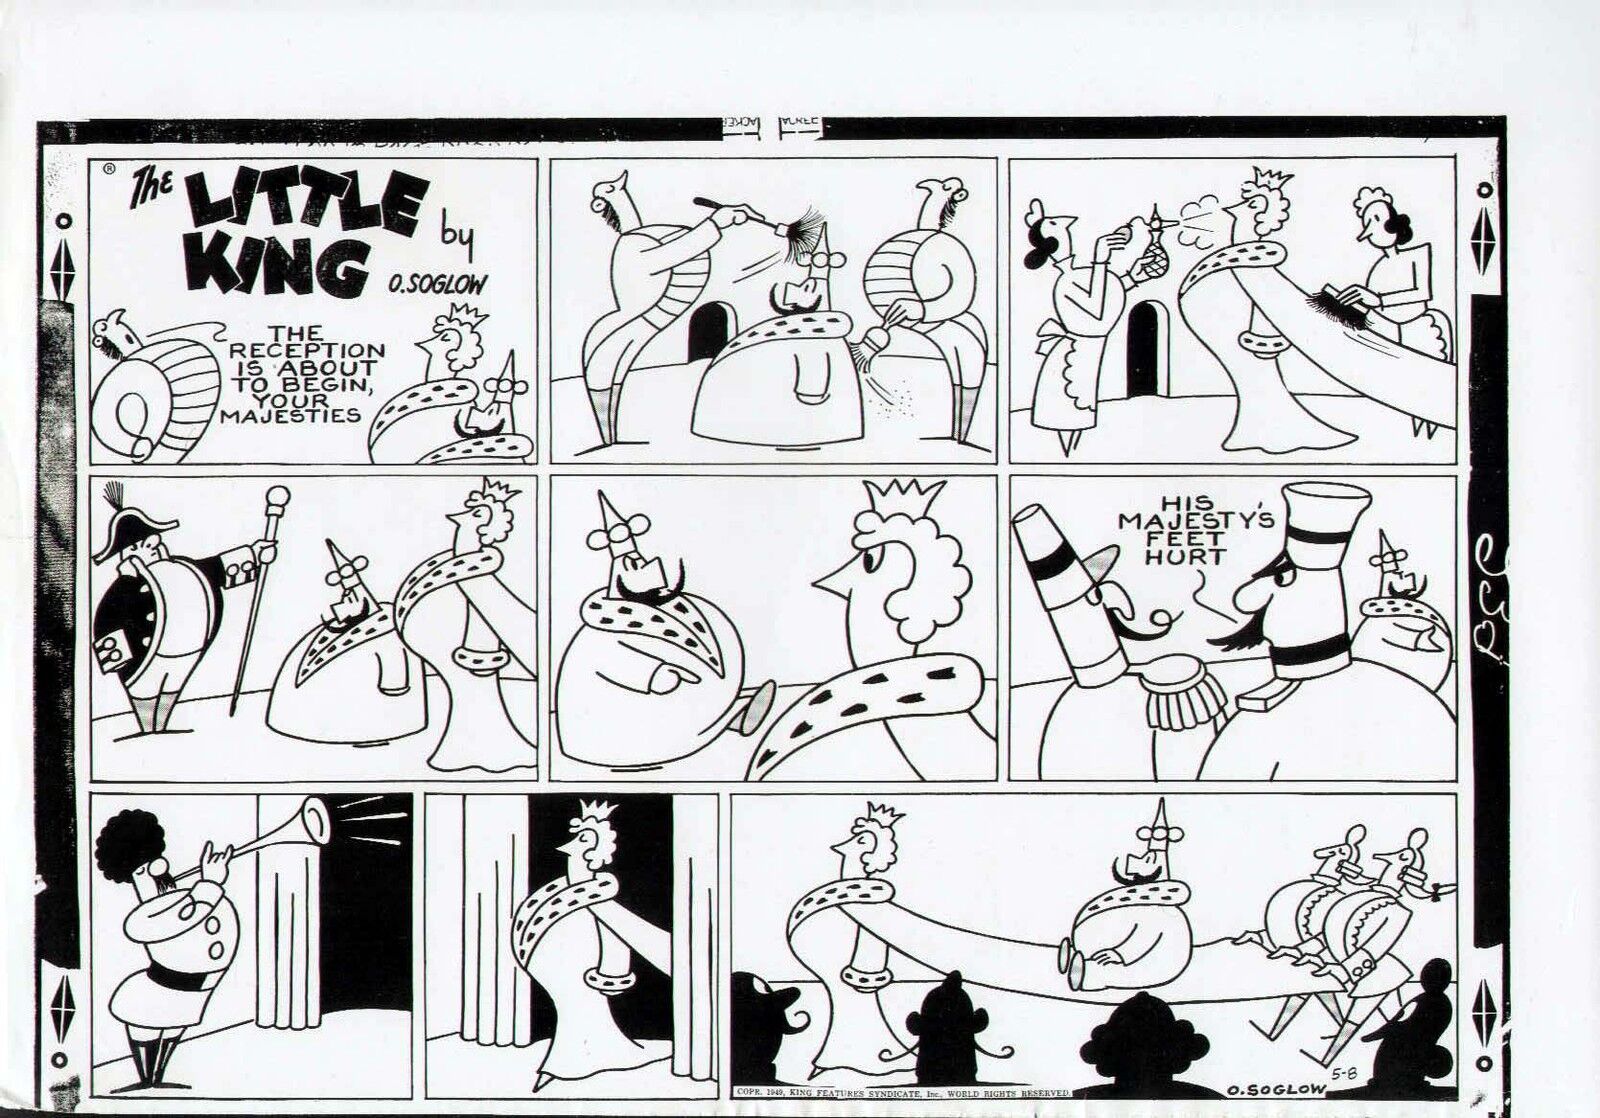 1949 LITTLE KING OTTO SOGLOW ORIGINAL PRODUCTION ART PAGE SUNDAY NEWSPAPER COMIC